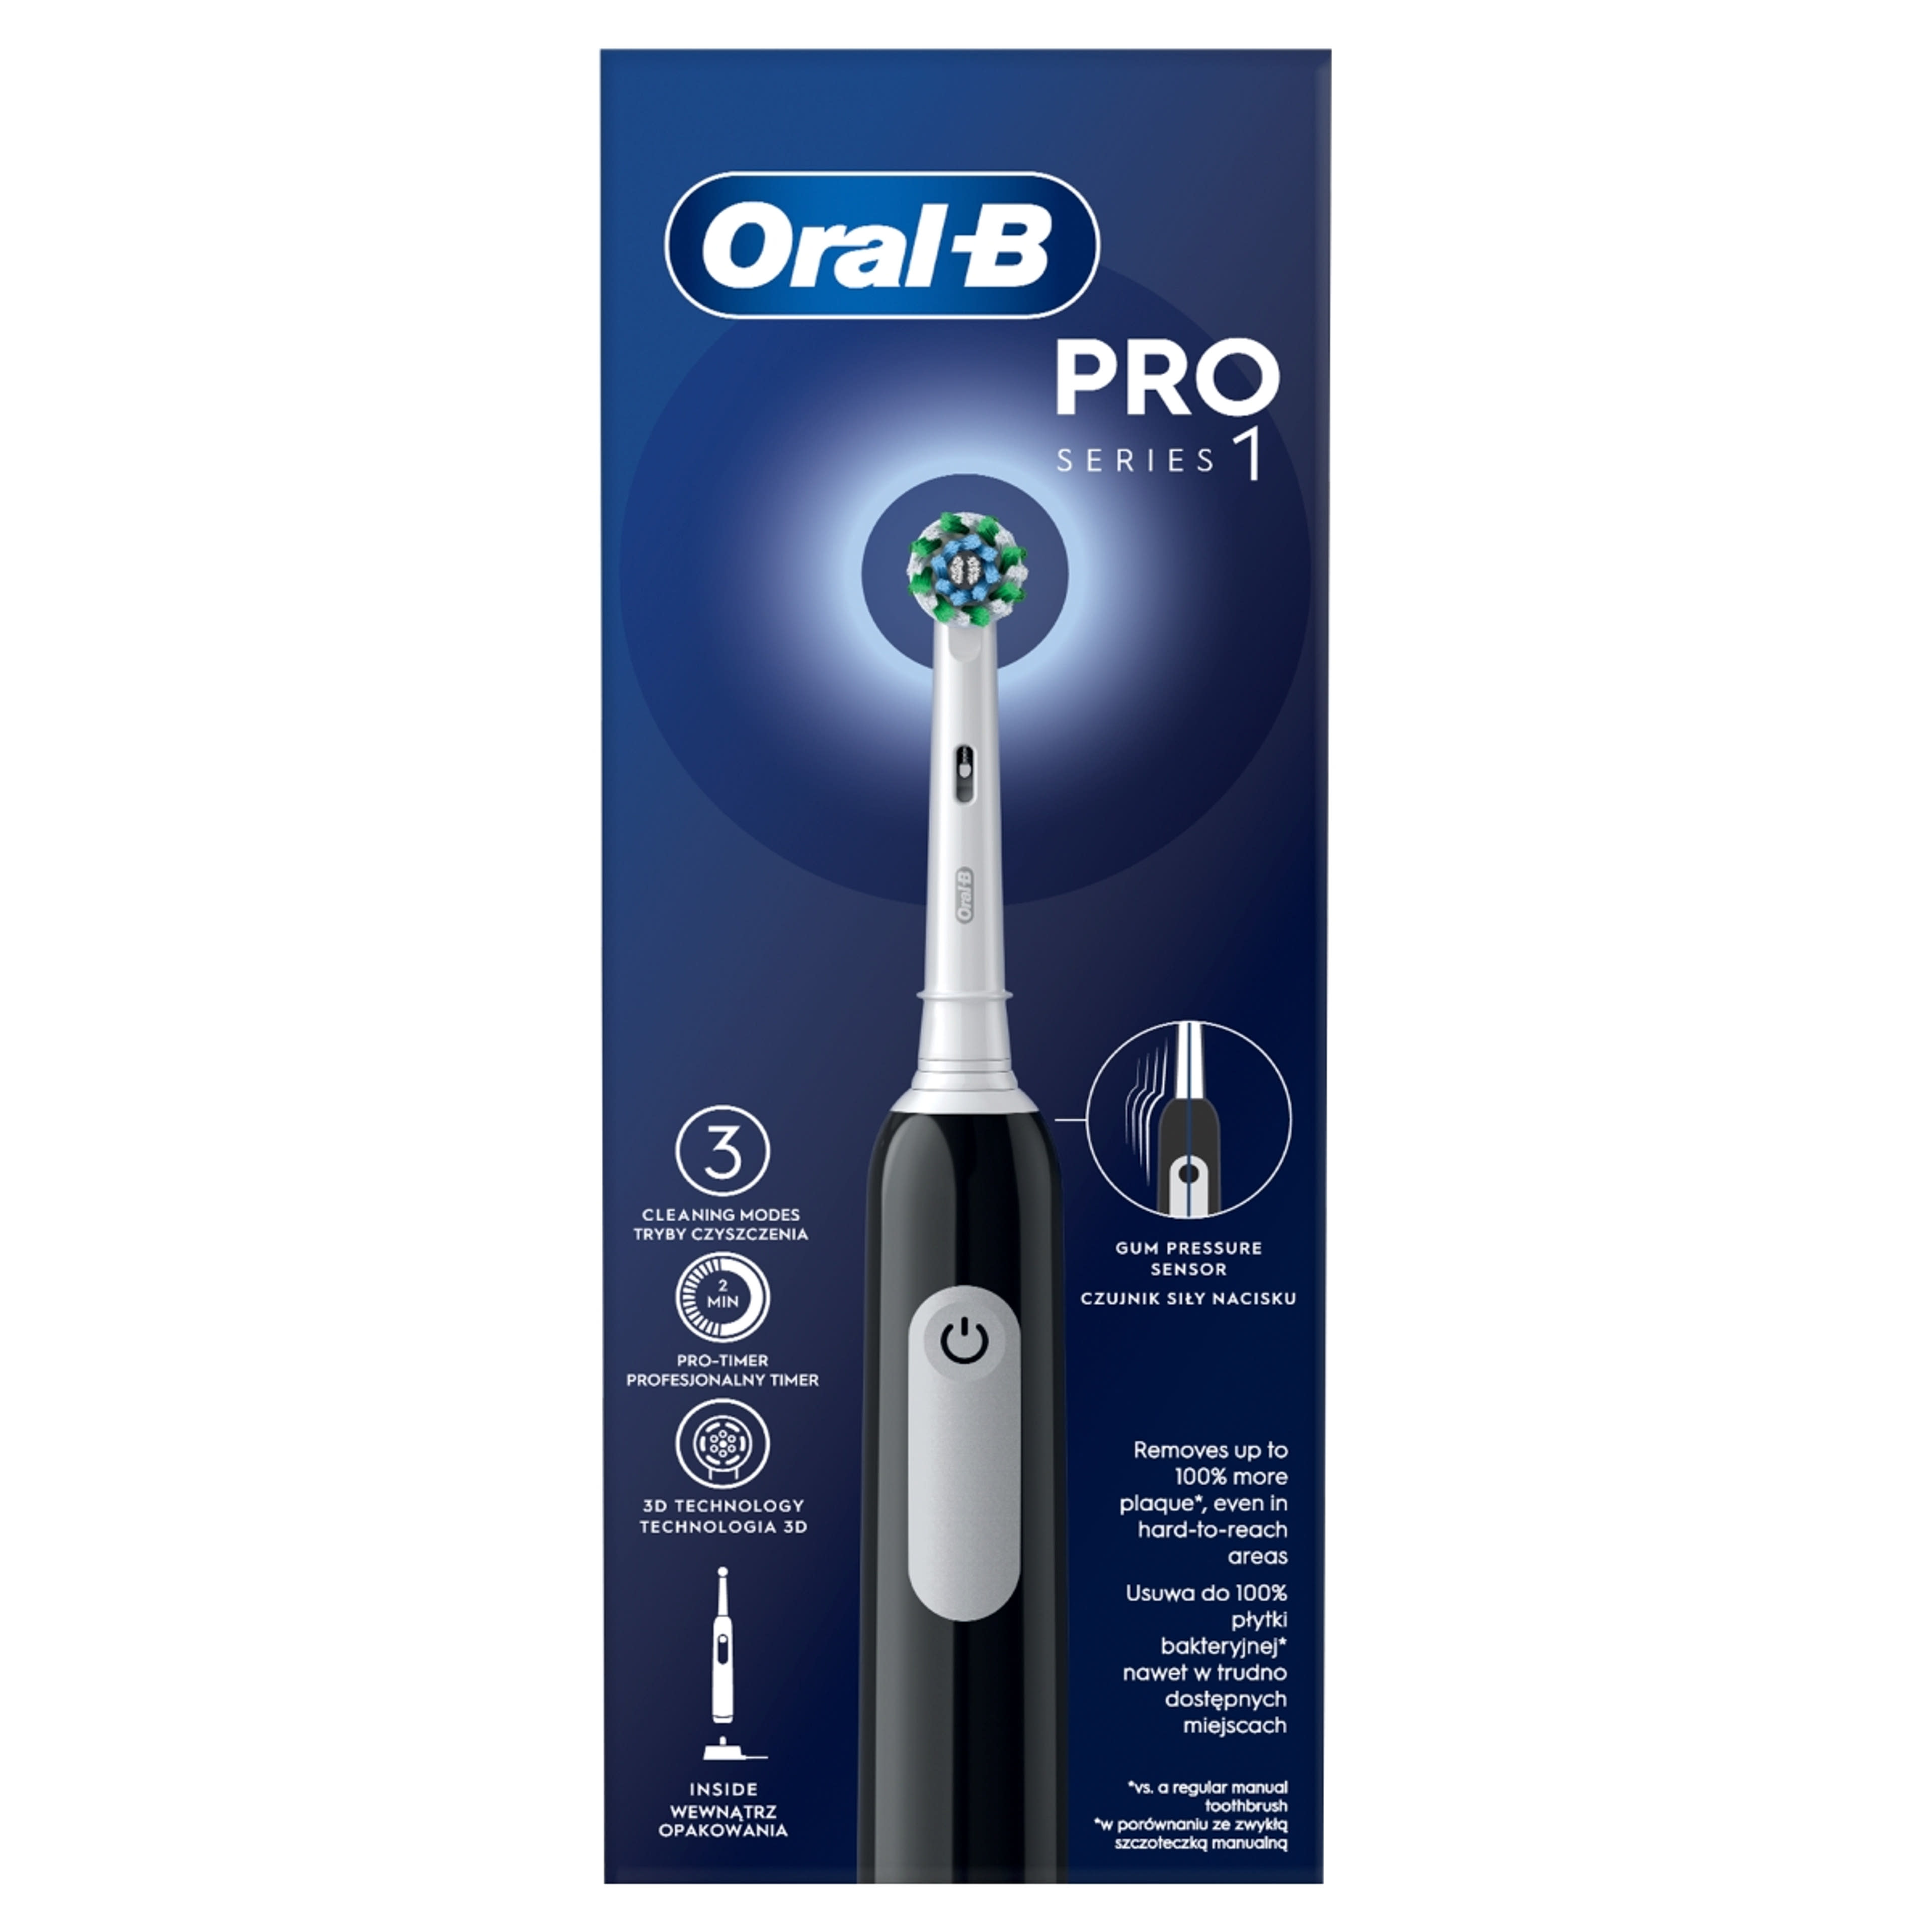 Oral B Pro 750 Design Edition elektromos fogkefe - 1 db-1